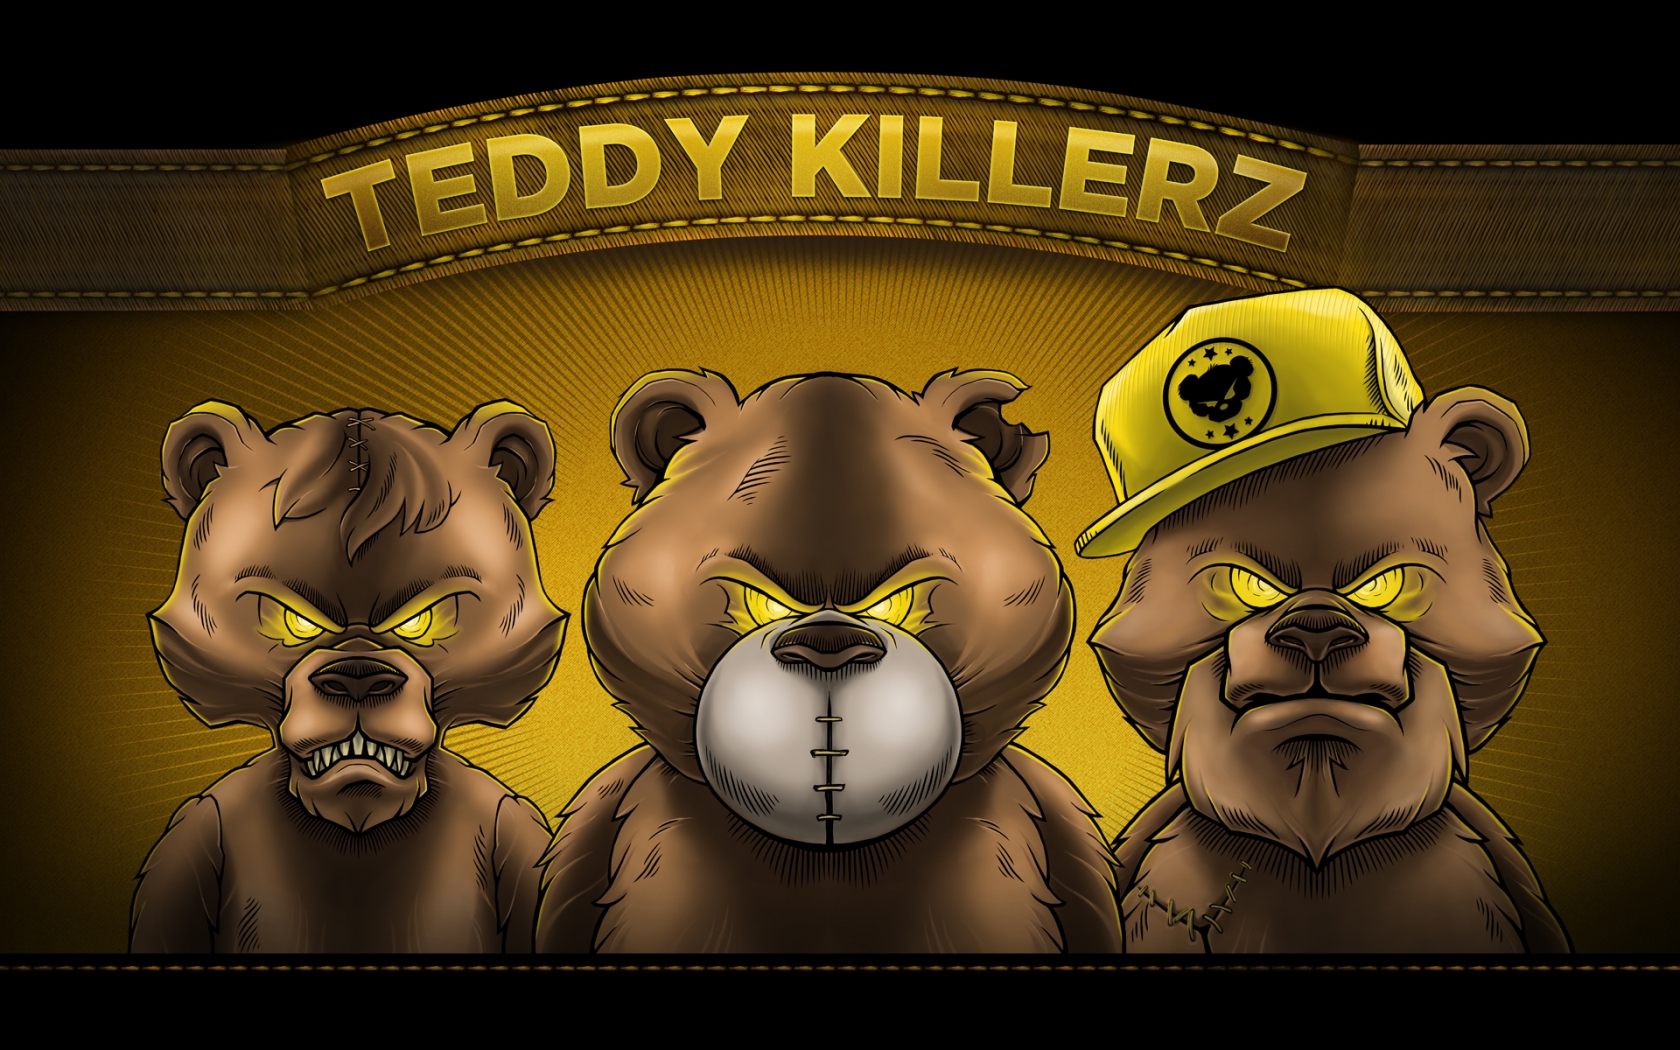 Teddy Killerz Poster for 1680 x 1050 widescreen resolution